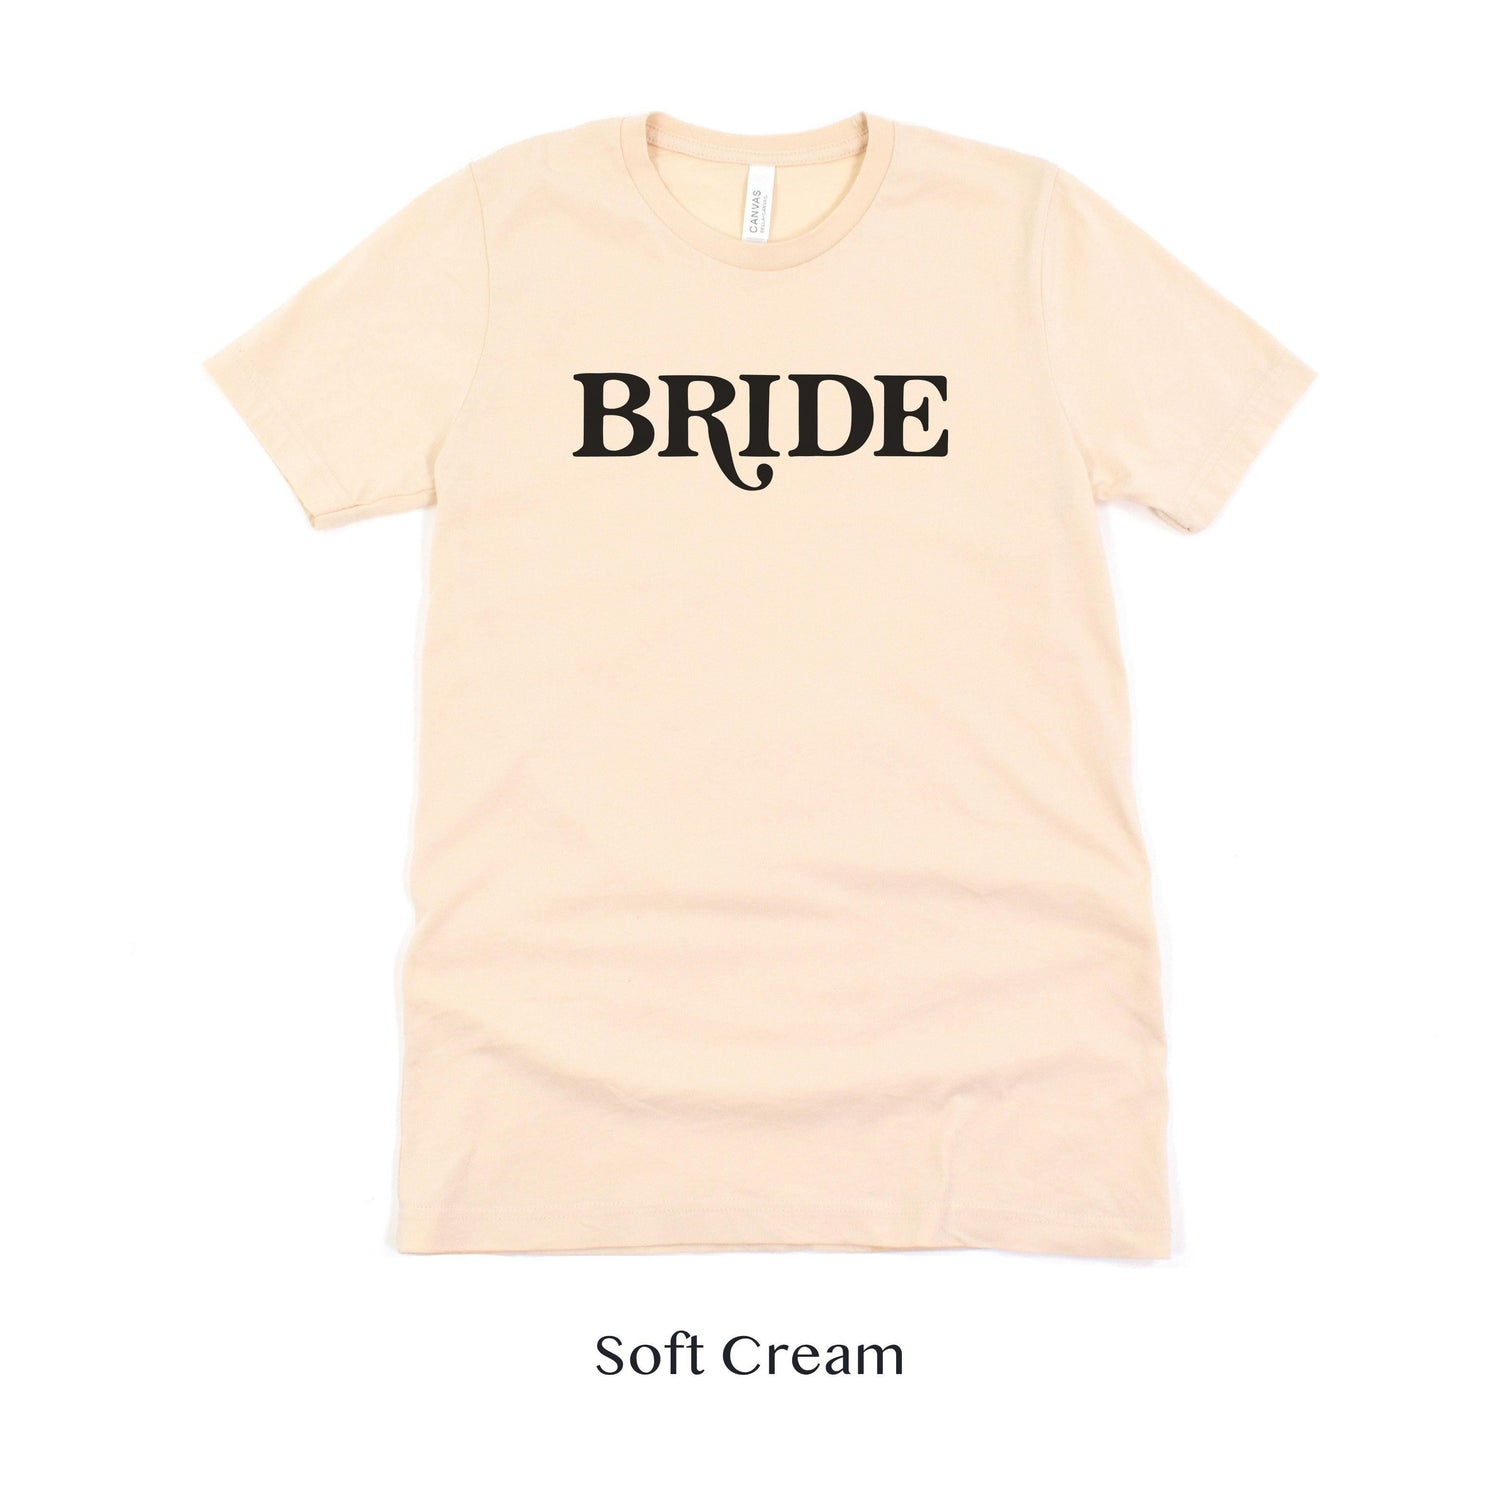 Bride Retro Short-sleeve Tee by Oaklynn Lane - Soft Cream Shirt